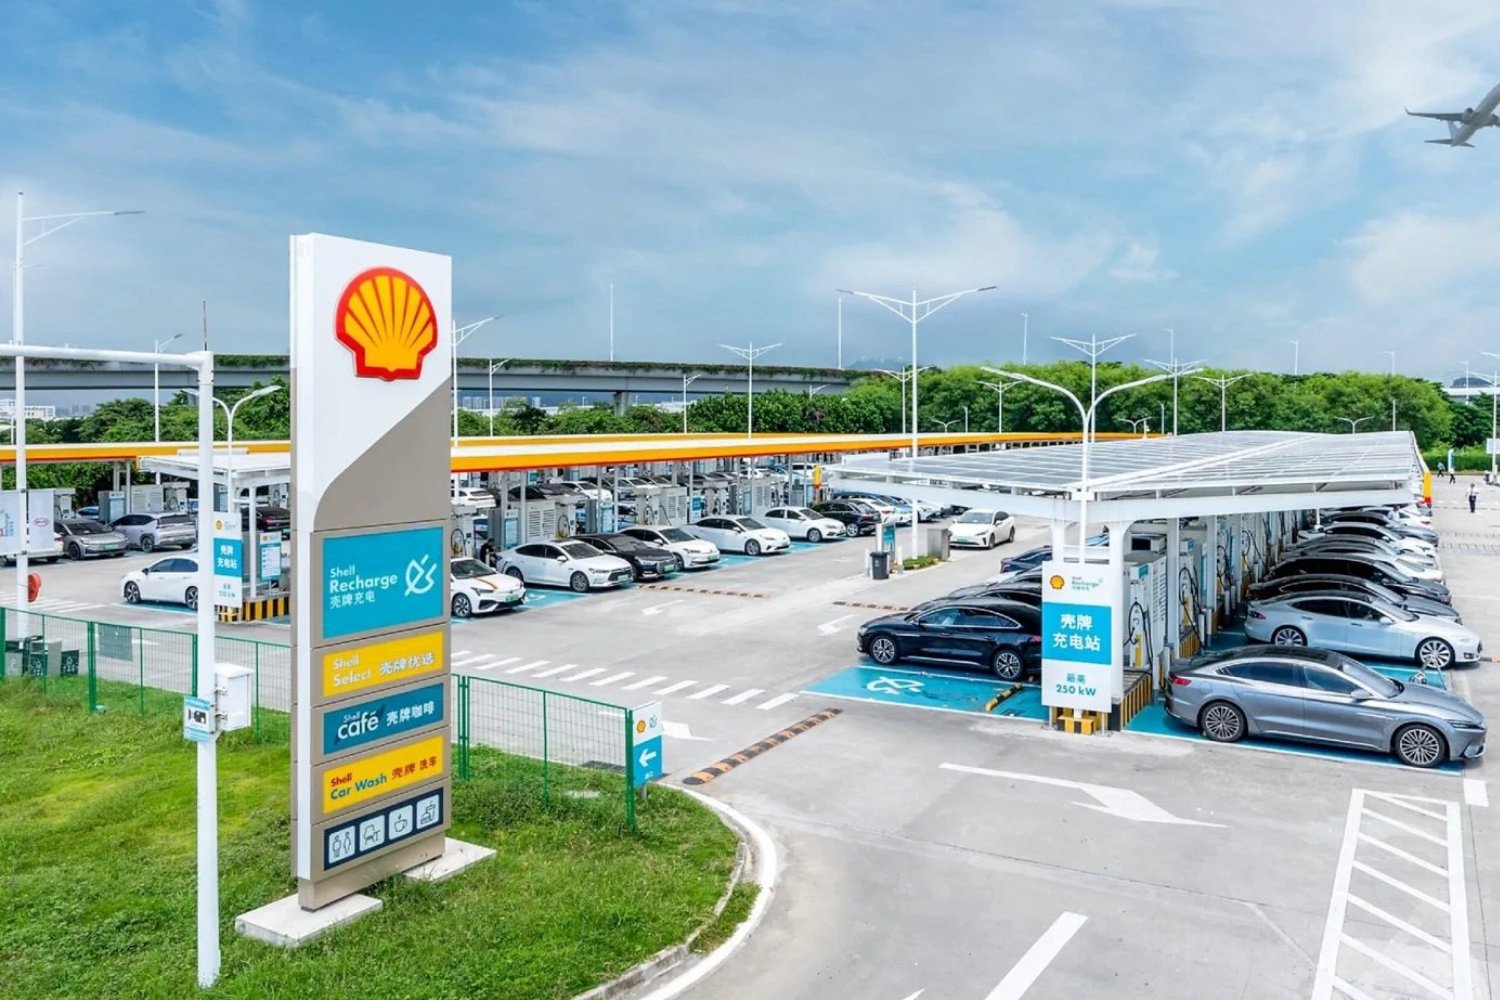 Shell Station Recharge Shenzhen Aeroport